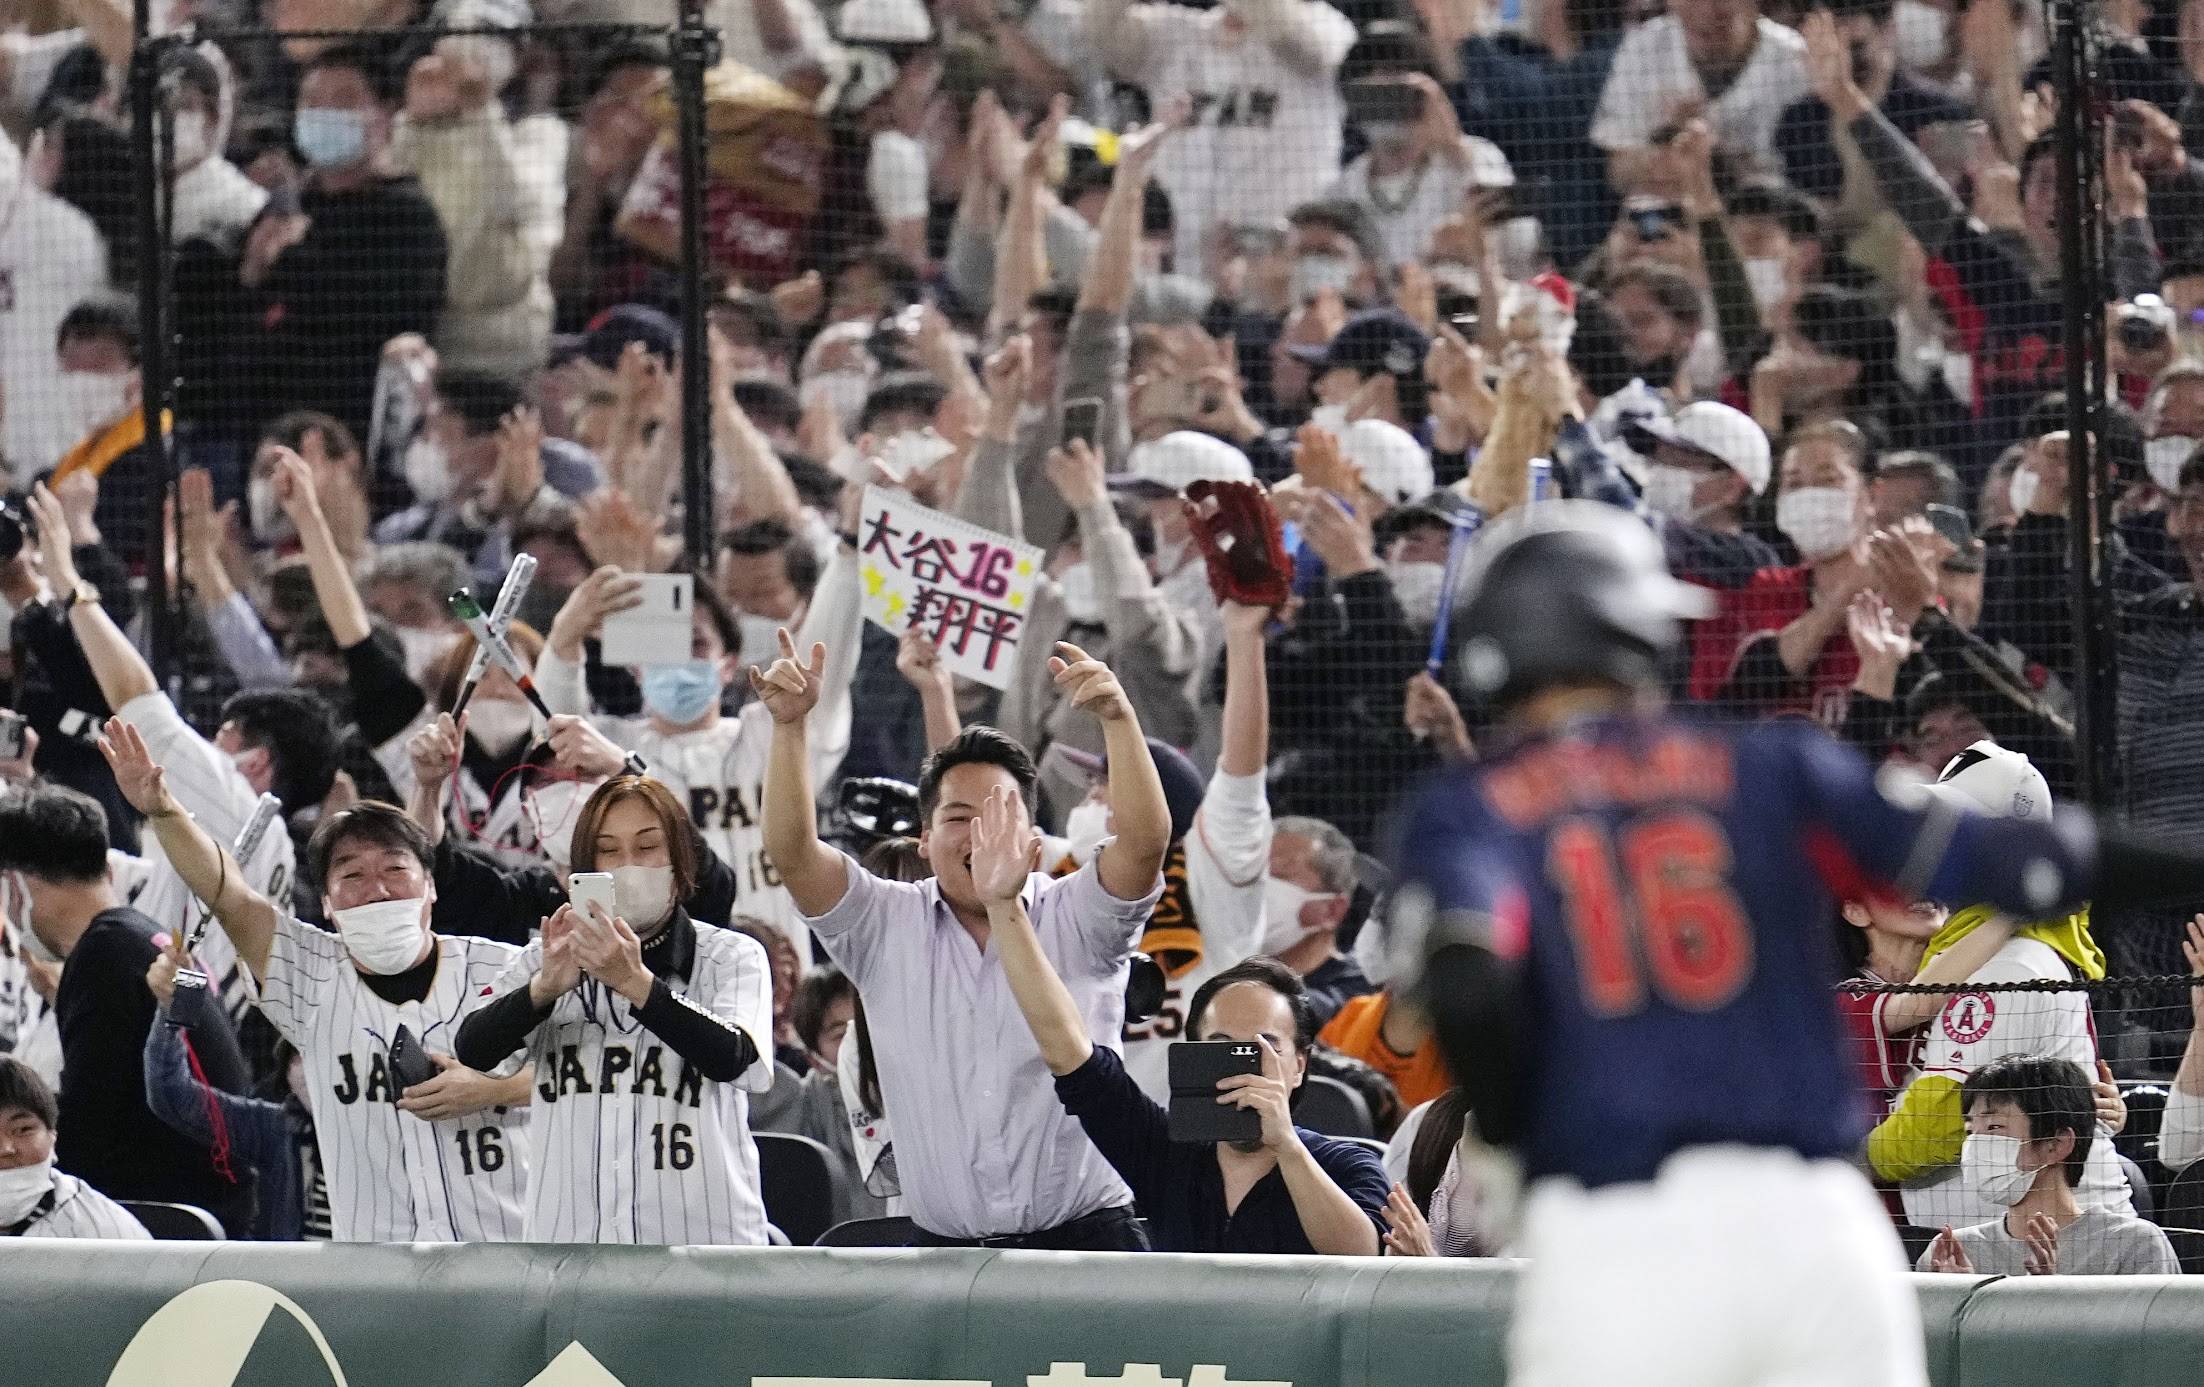 Japanese fans earn share of spotlight at World Baseball Classic